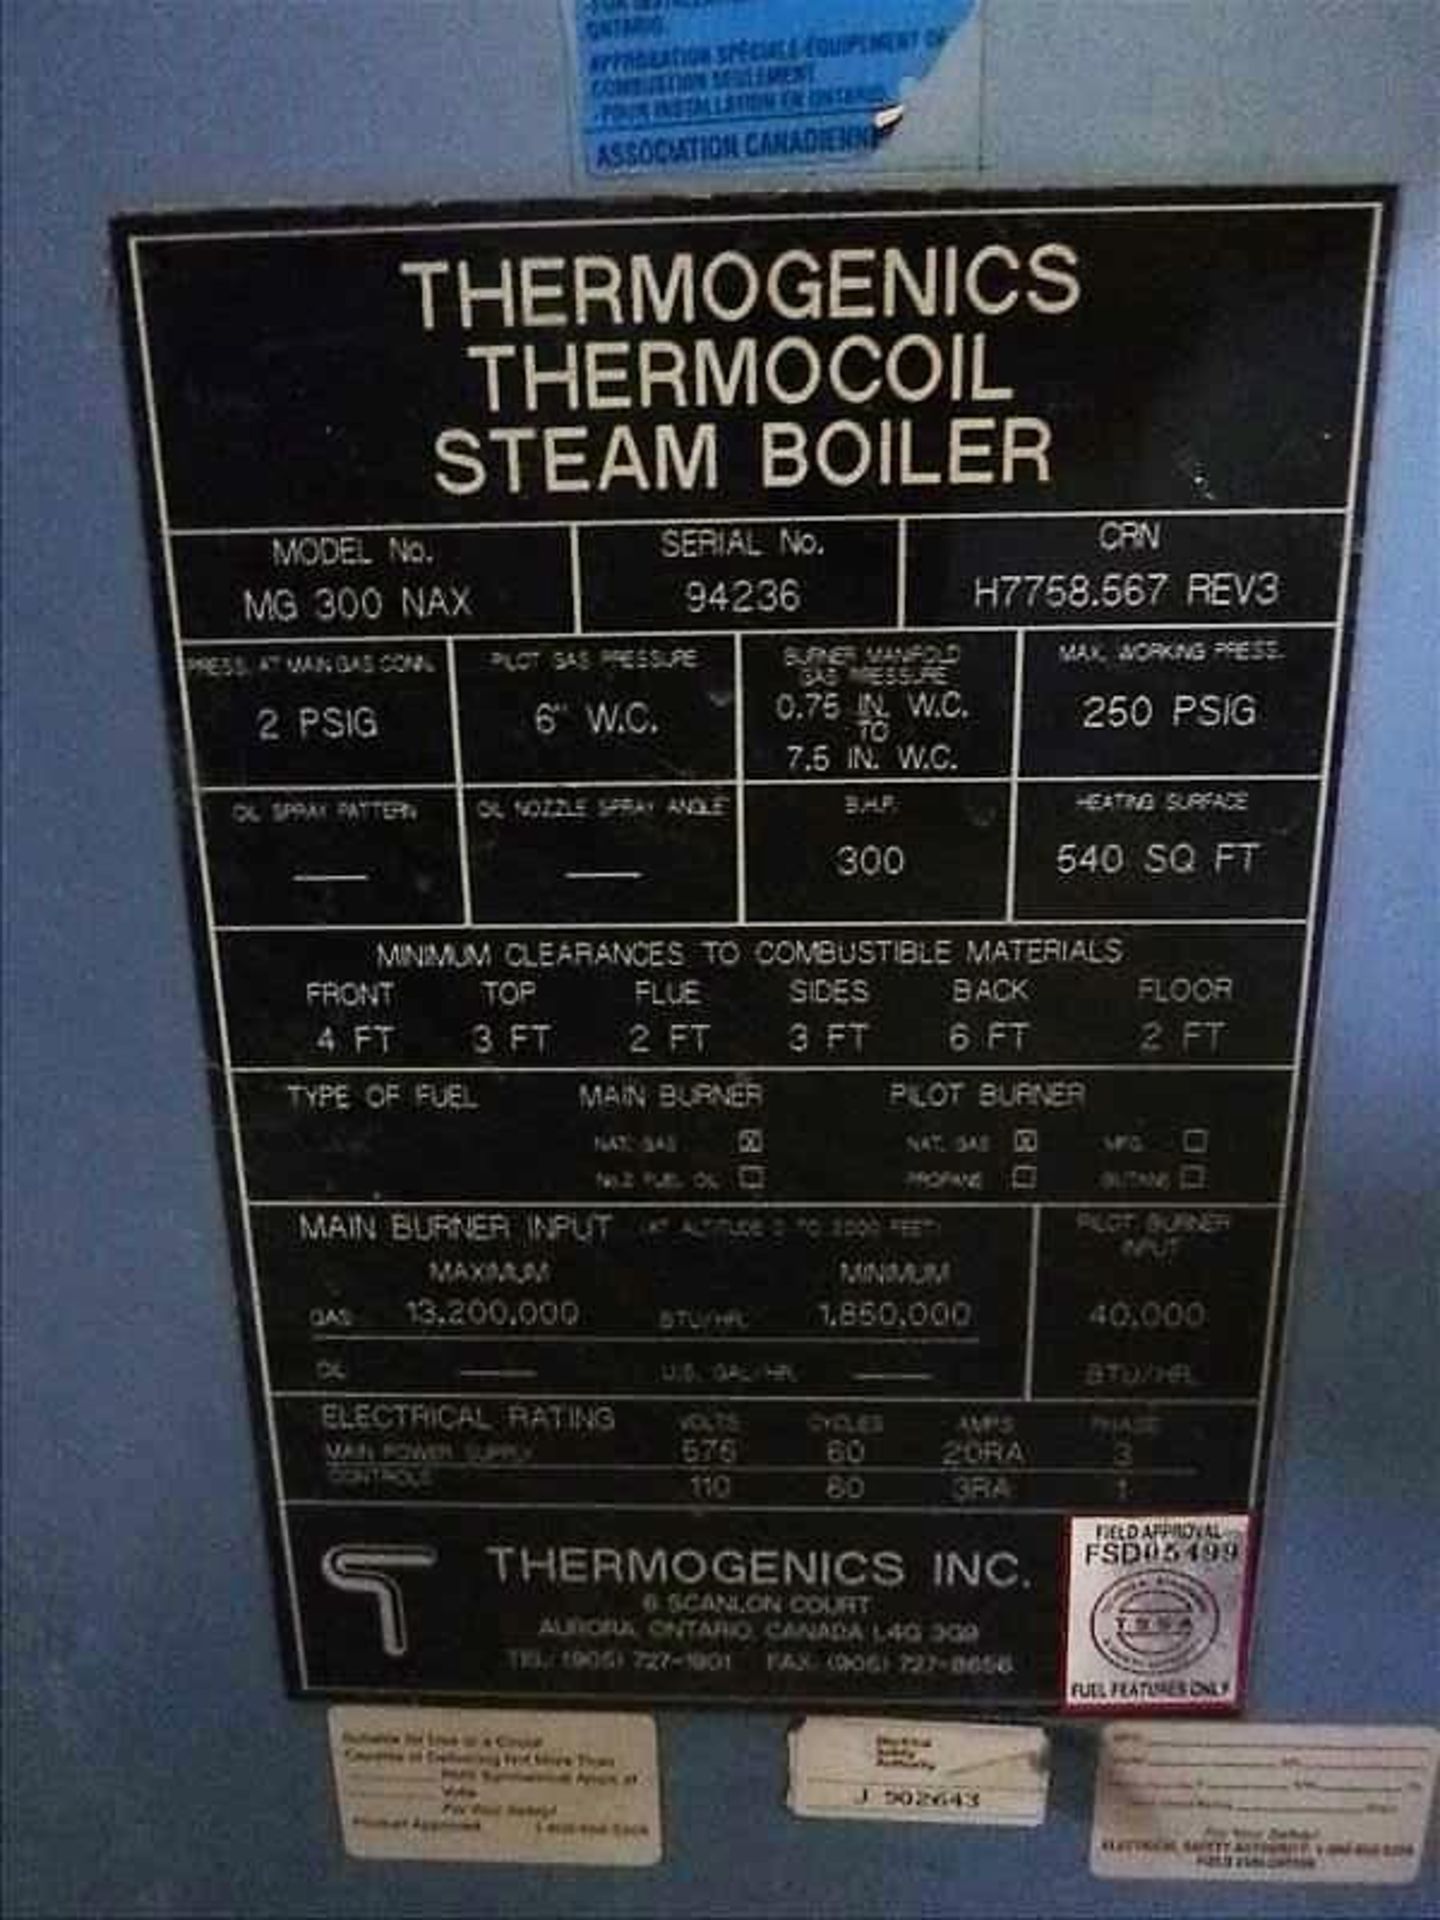 Thermogenics thermocoil steam boiler (no. 6), mod. MG300 NAX, ser. no. 94236, 1,850,000 BTU, 365 hp, - Image 2 of 2